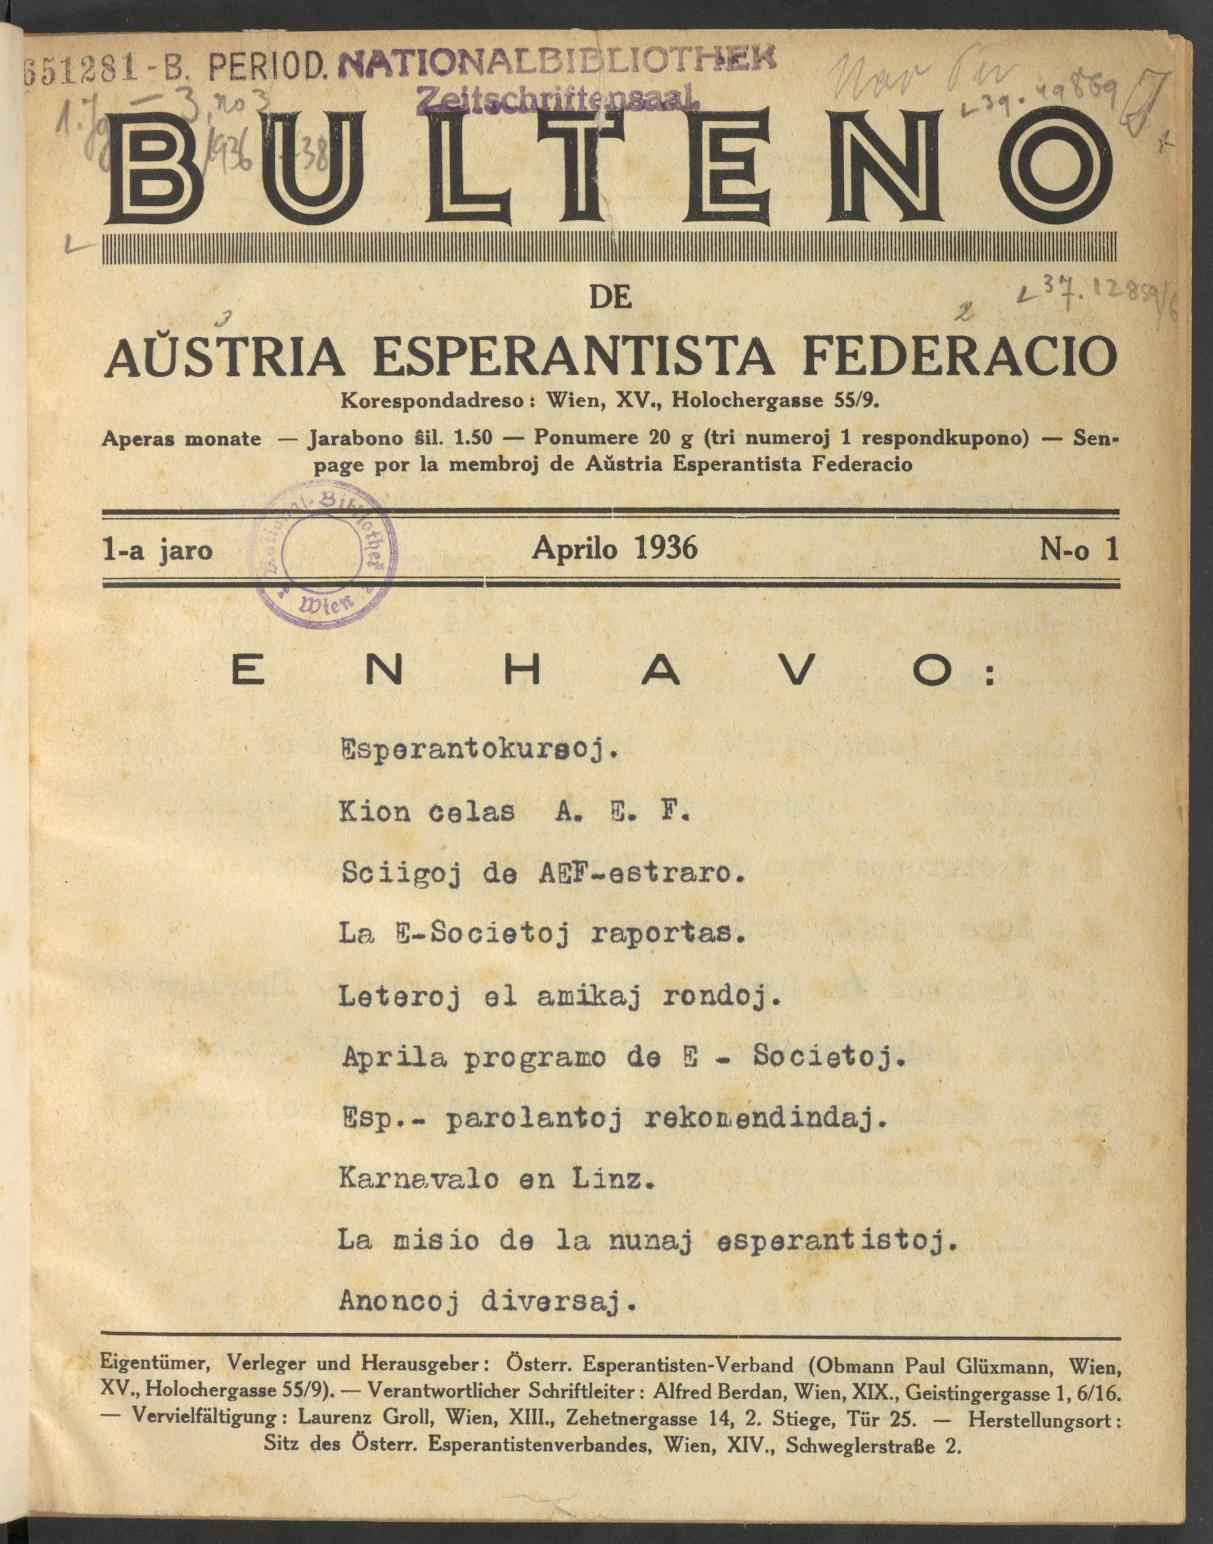 Bulteno de Aŭstria Esperantista Federacio, April 1936, S.1, ANNO/ÖNB